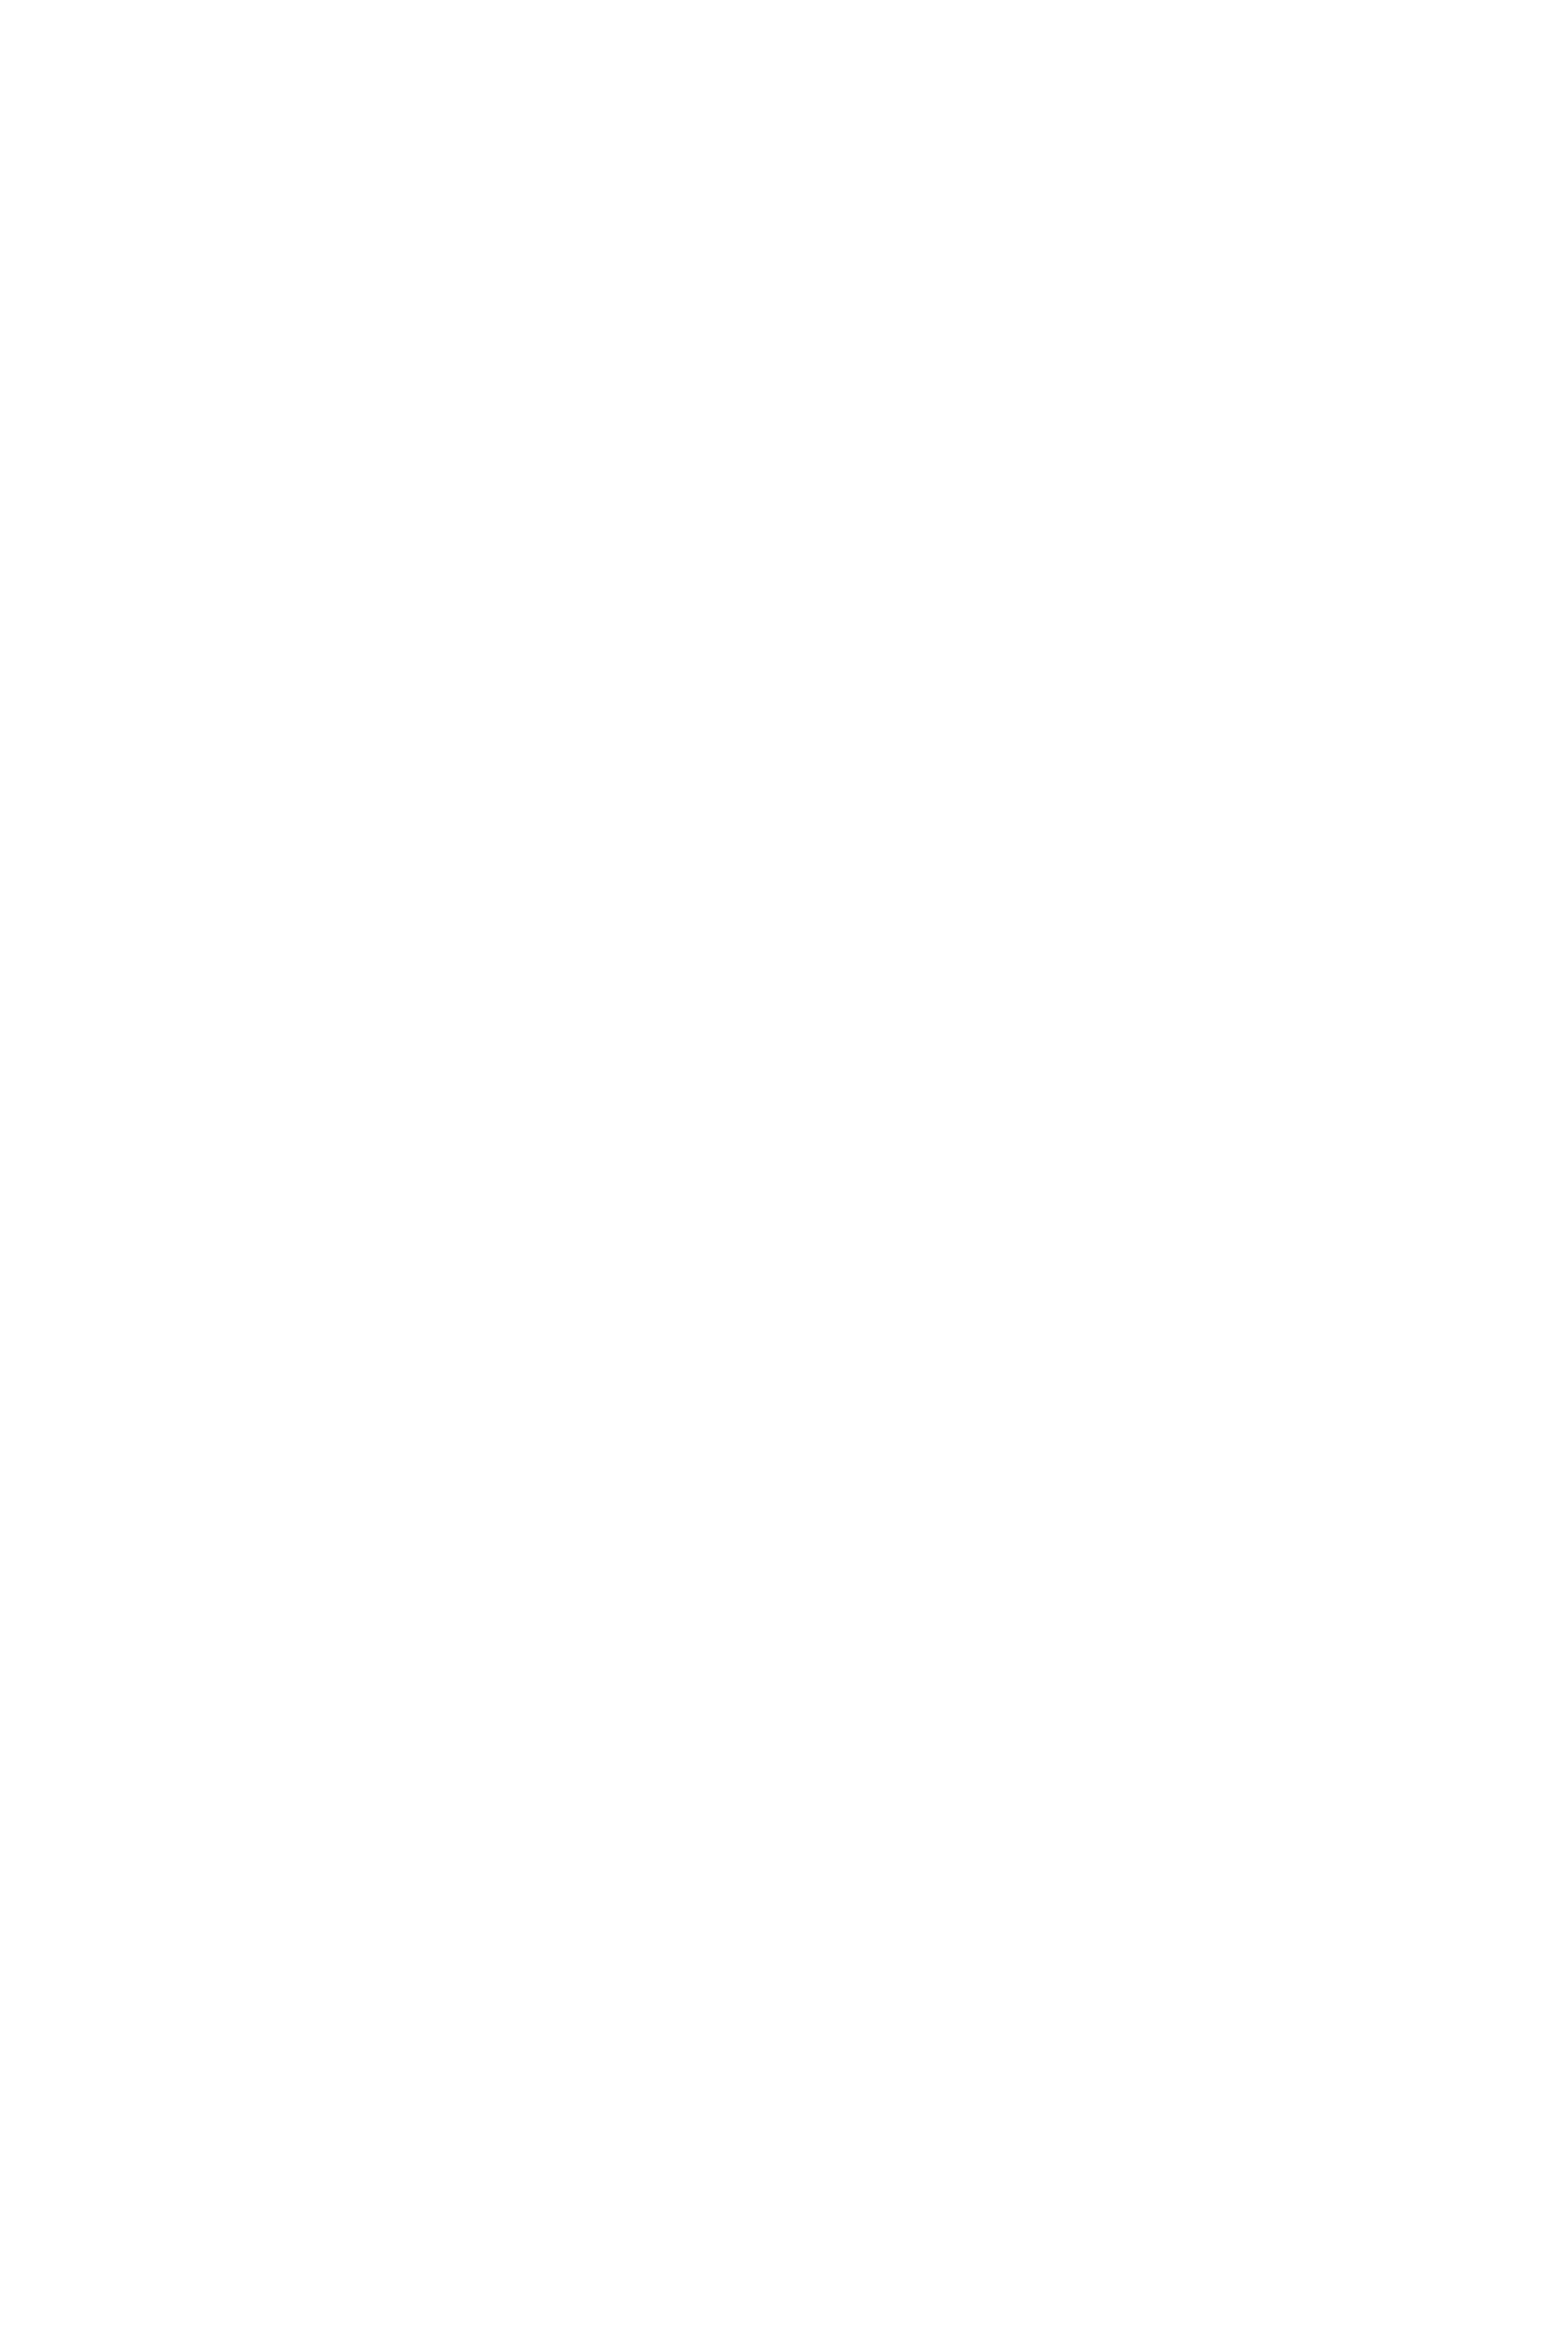 Danielle Levitt studio fashion photography celebrity portrait of singer Caroline Polachek posing on white backdrop wearing frilly dress and colorful head scarf for V Magazine editorial